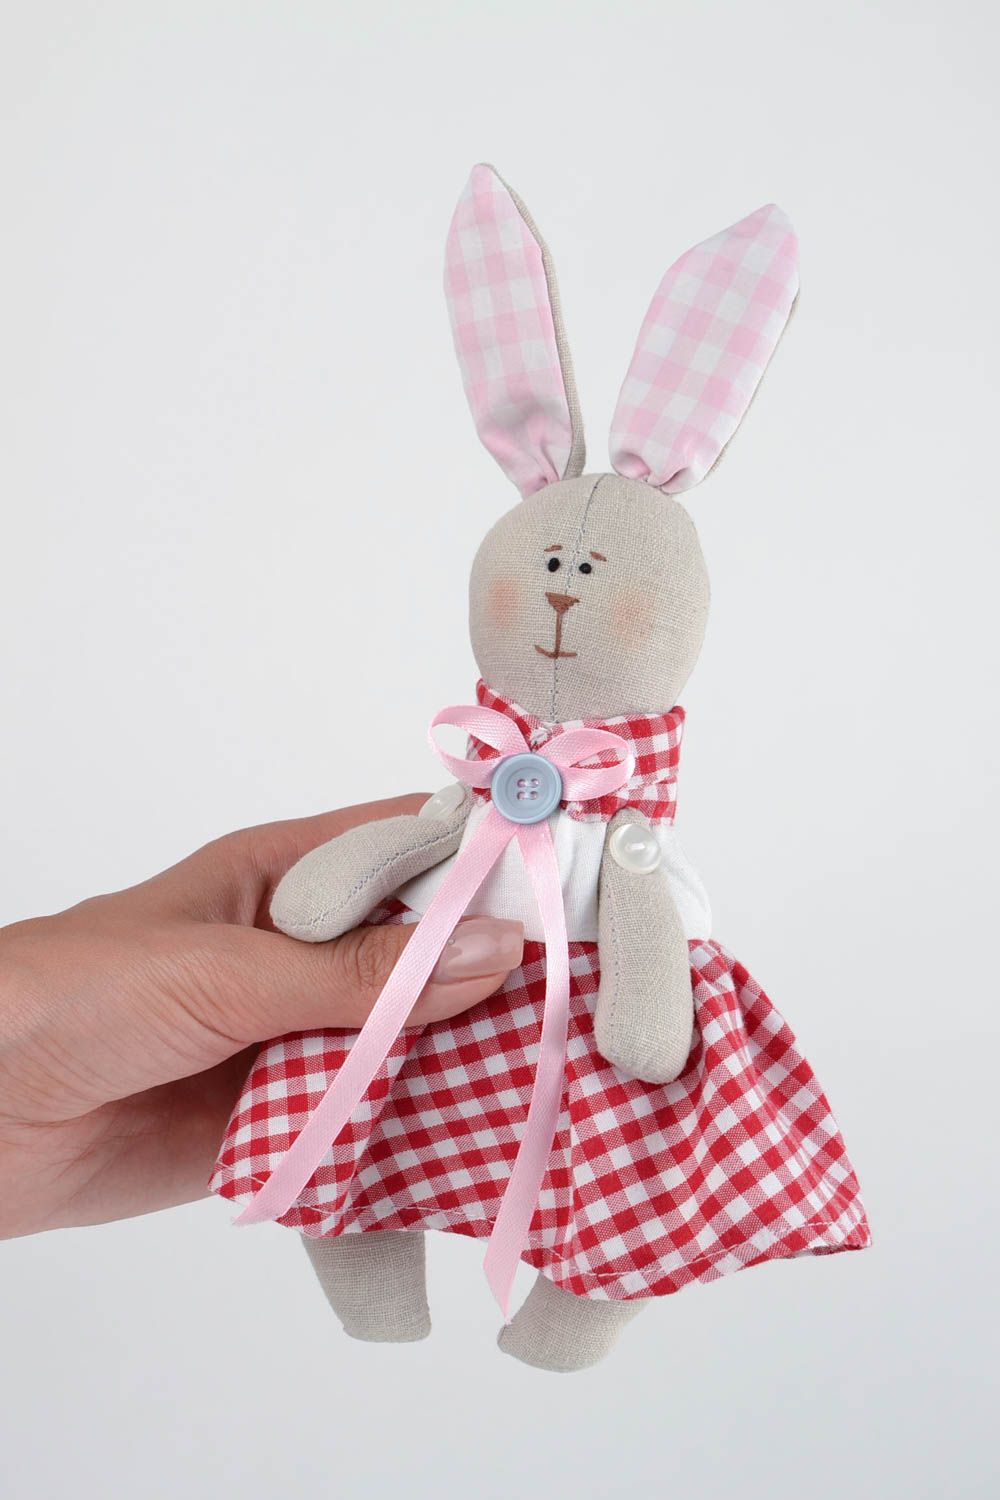 Stuffed toy rabbit toy homemade crafts handmade toys nursery decor kids gifts photo 2